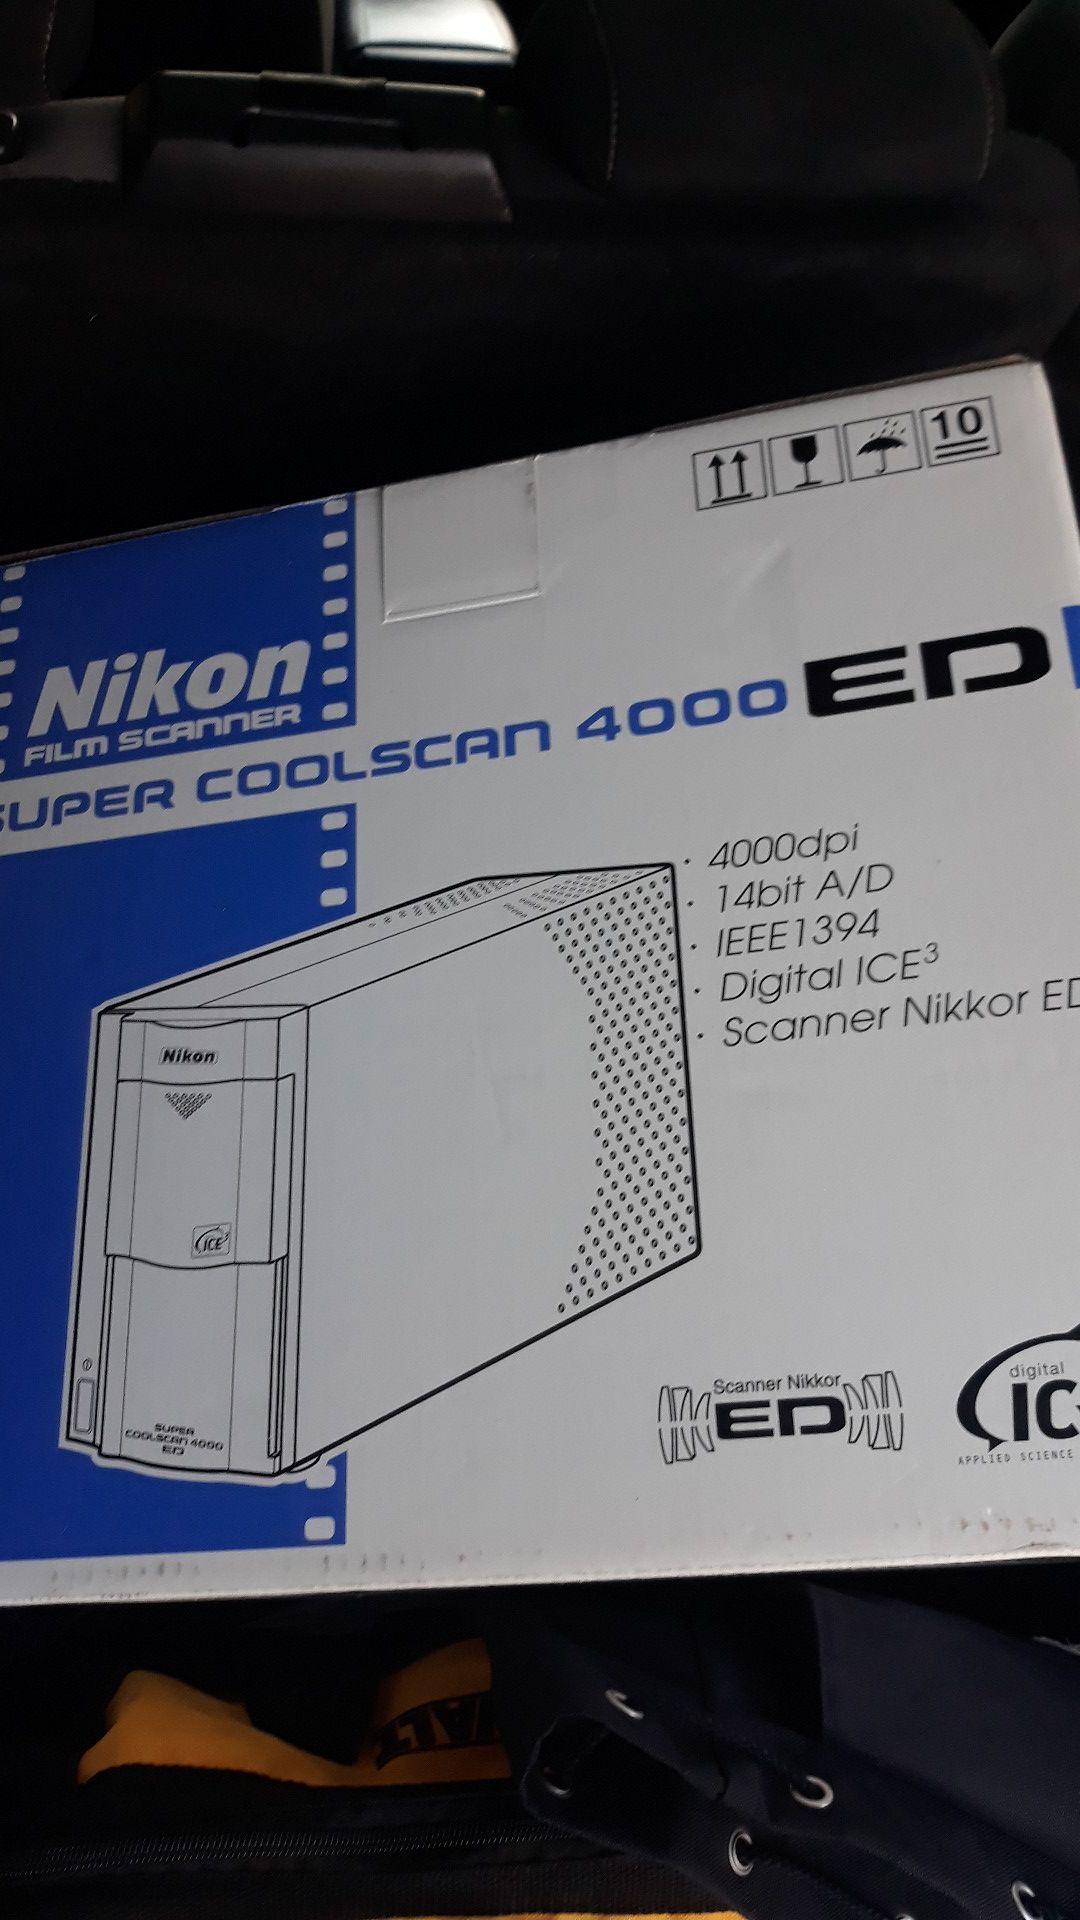 super coolscan 4000 ed